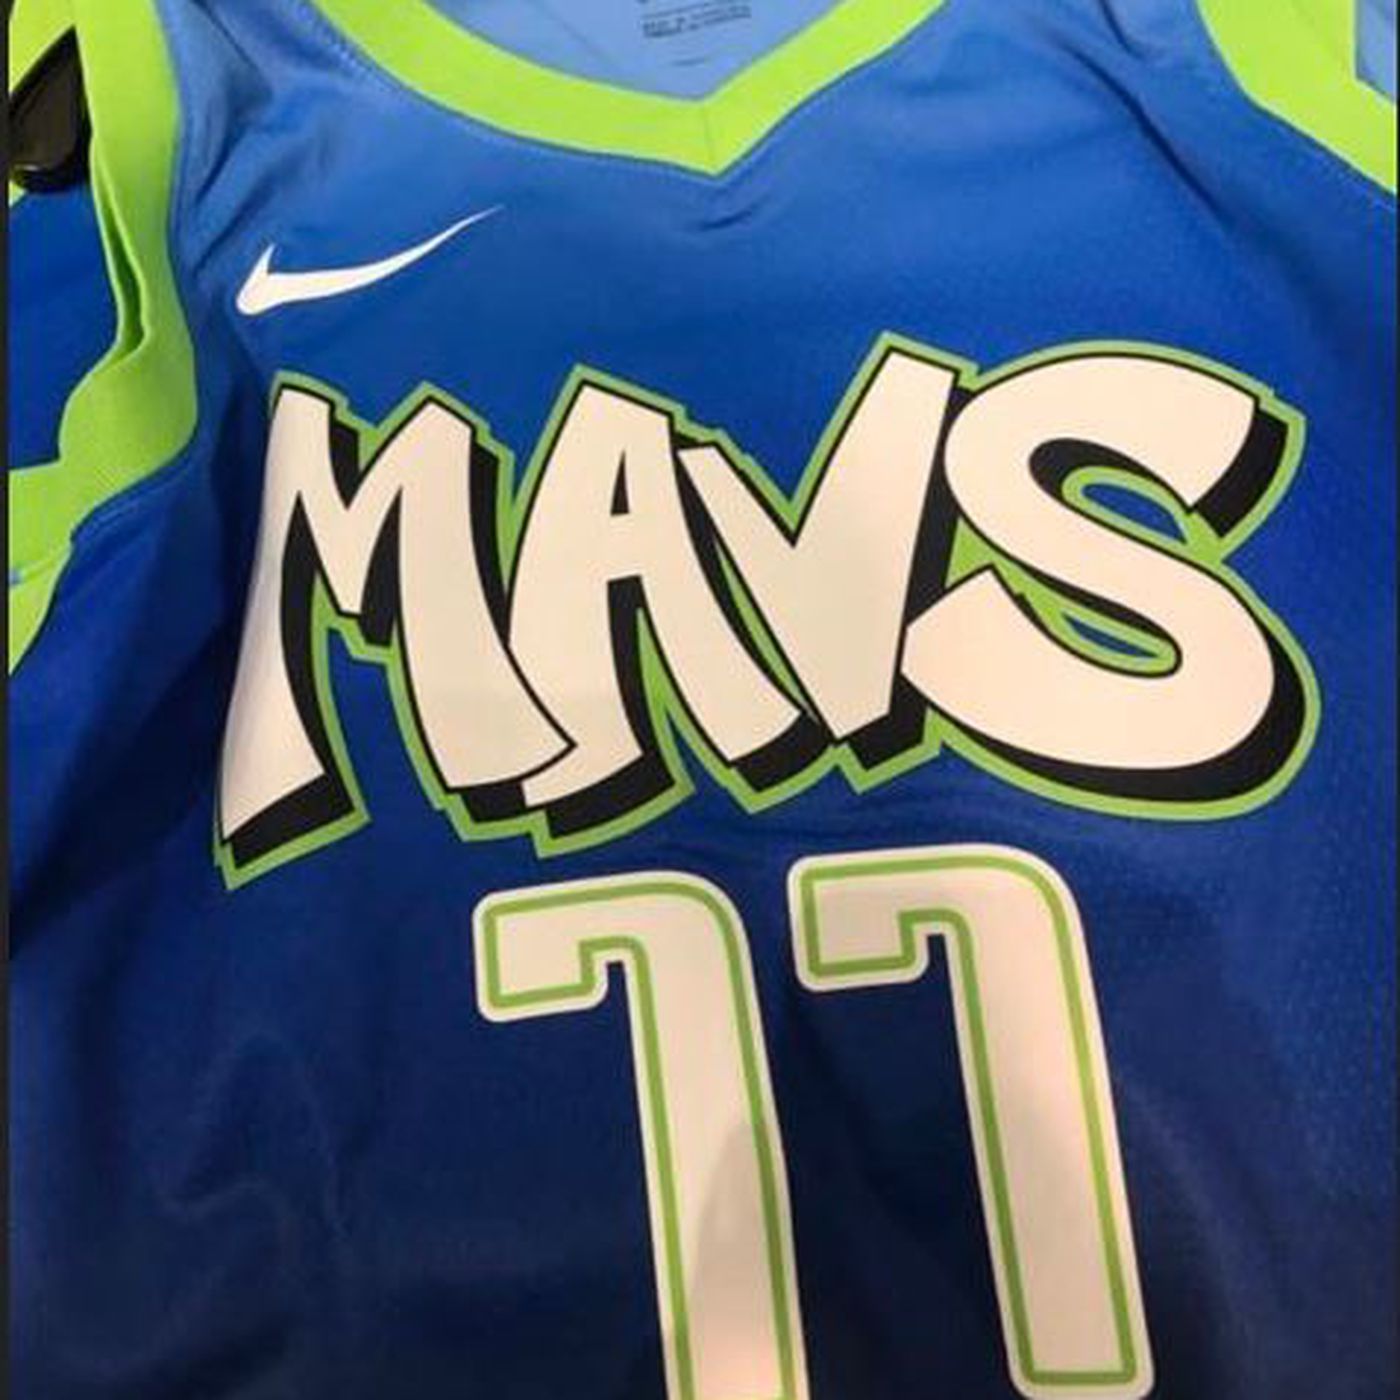 dallas mavericks jersey 2019